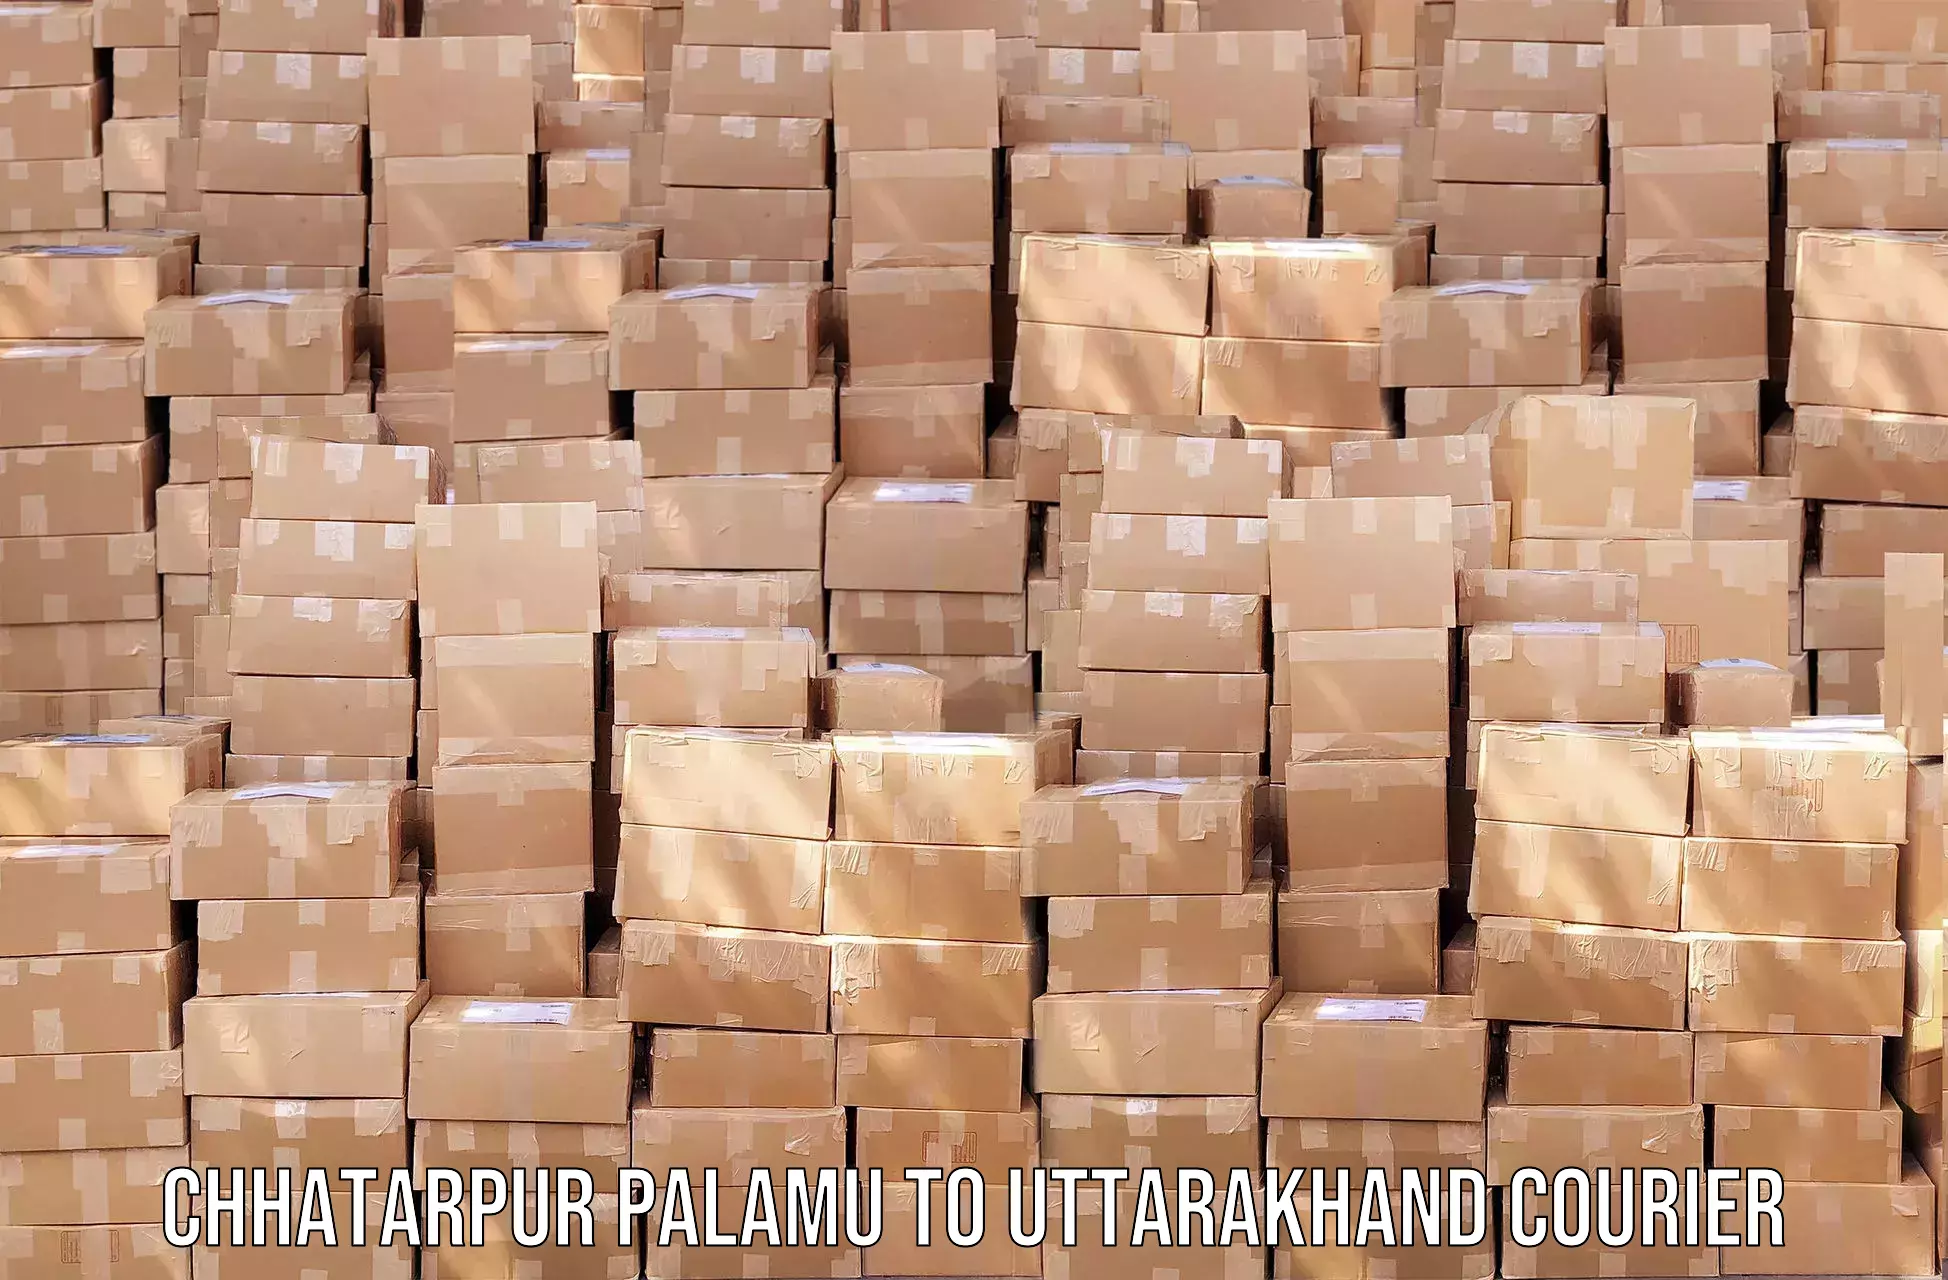 Postal and courier services Chhatarpur Palamu to Uttarakhand